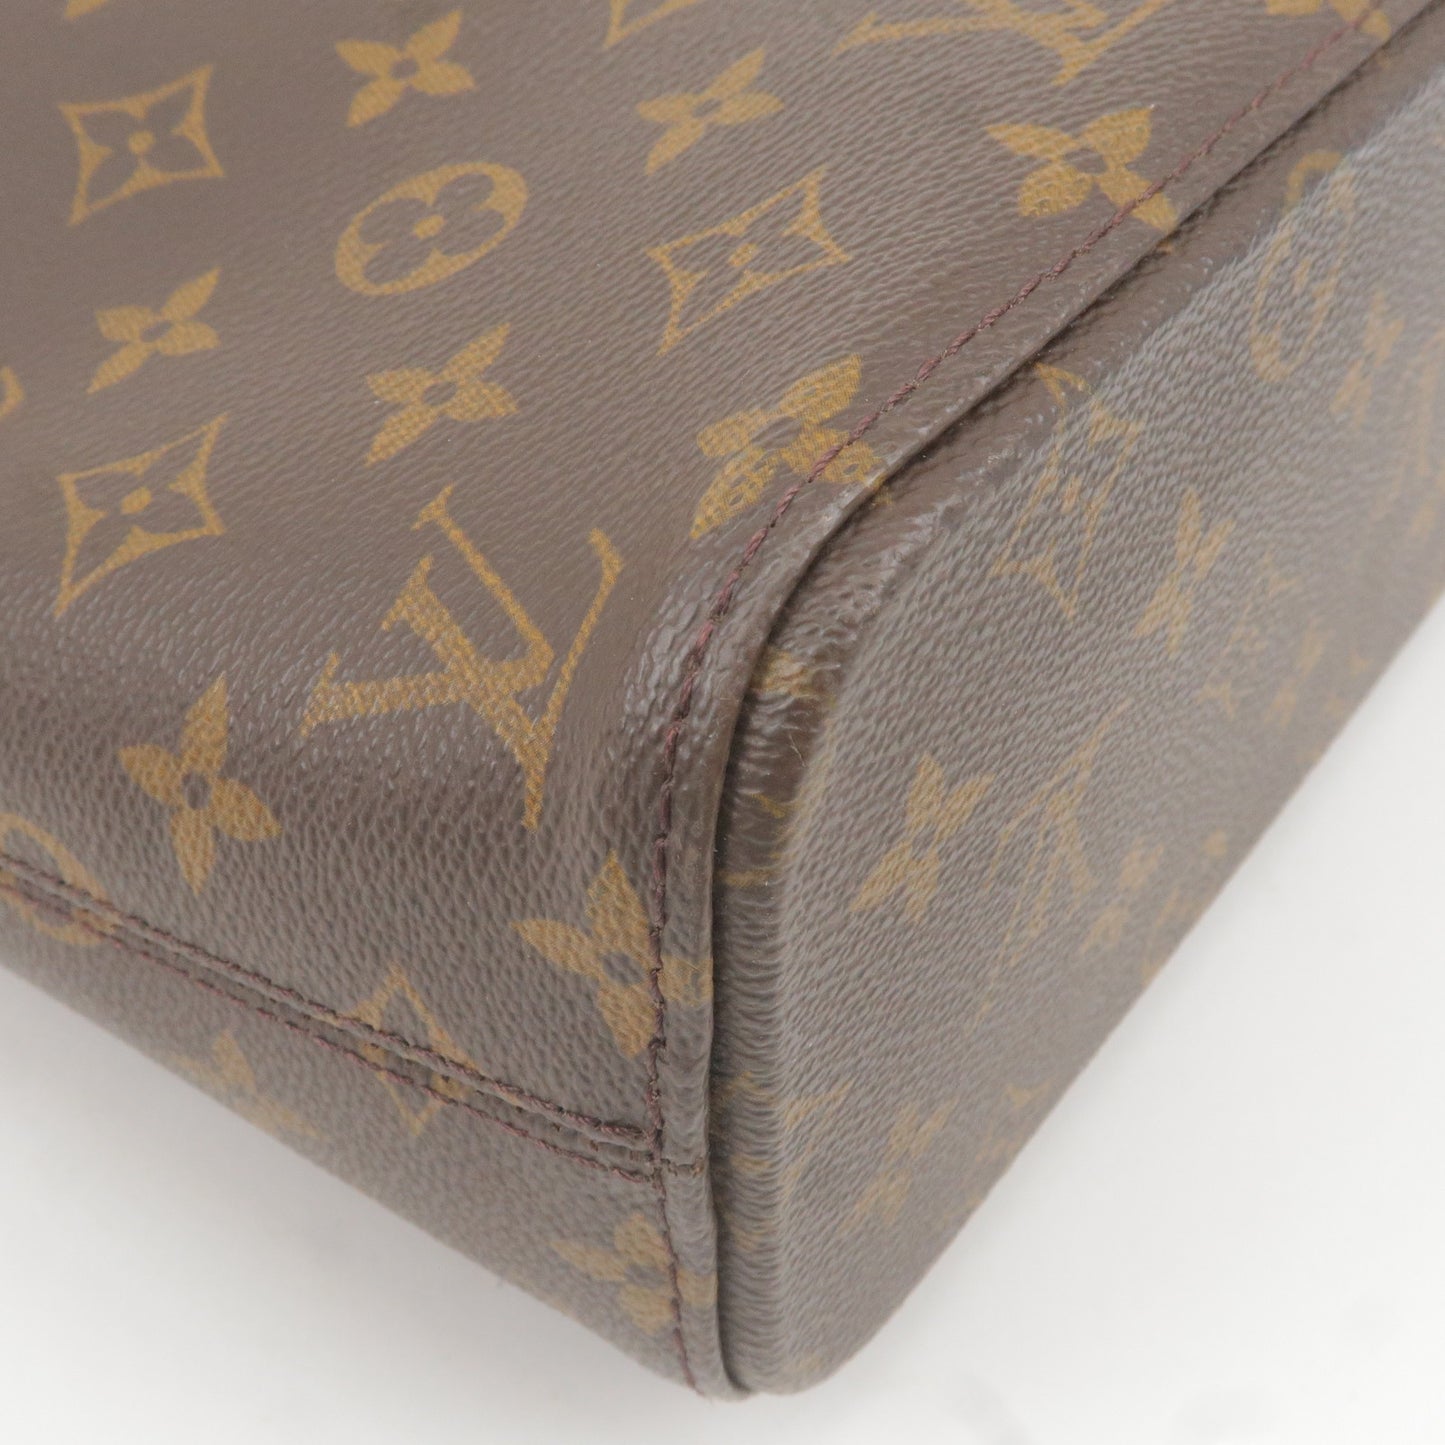 Louis Vuitton Monogram Luco Tote Bag Shoulder Bag M51155